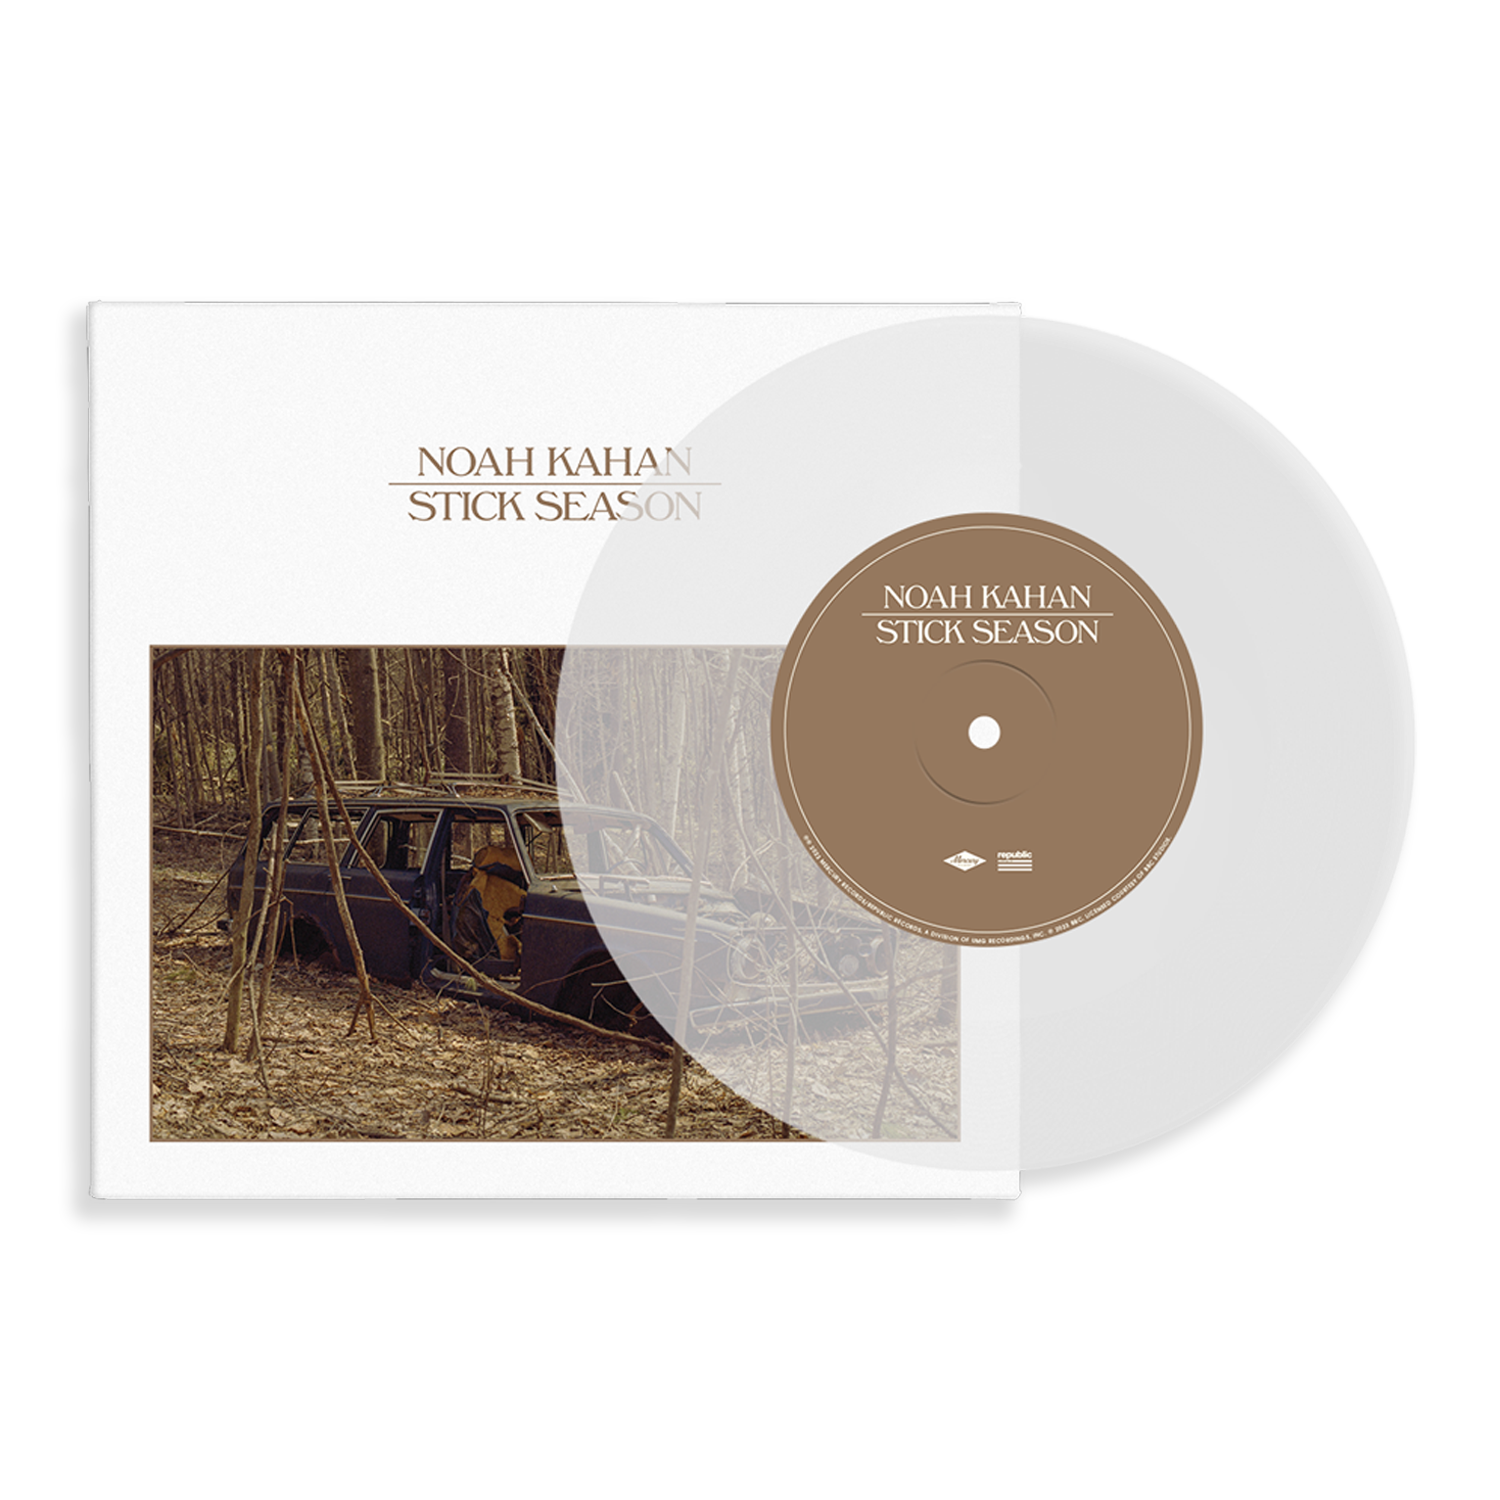 Noah Kahan - There's still some Stick Season vinyl available